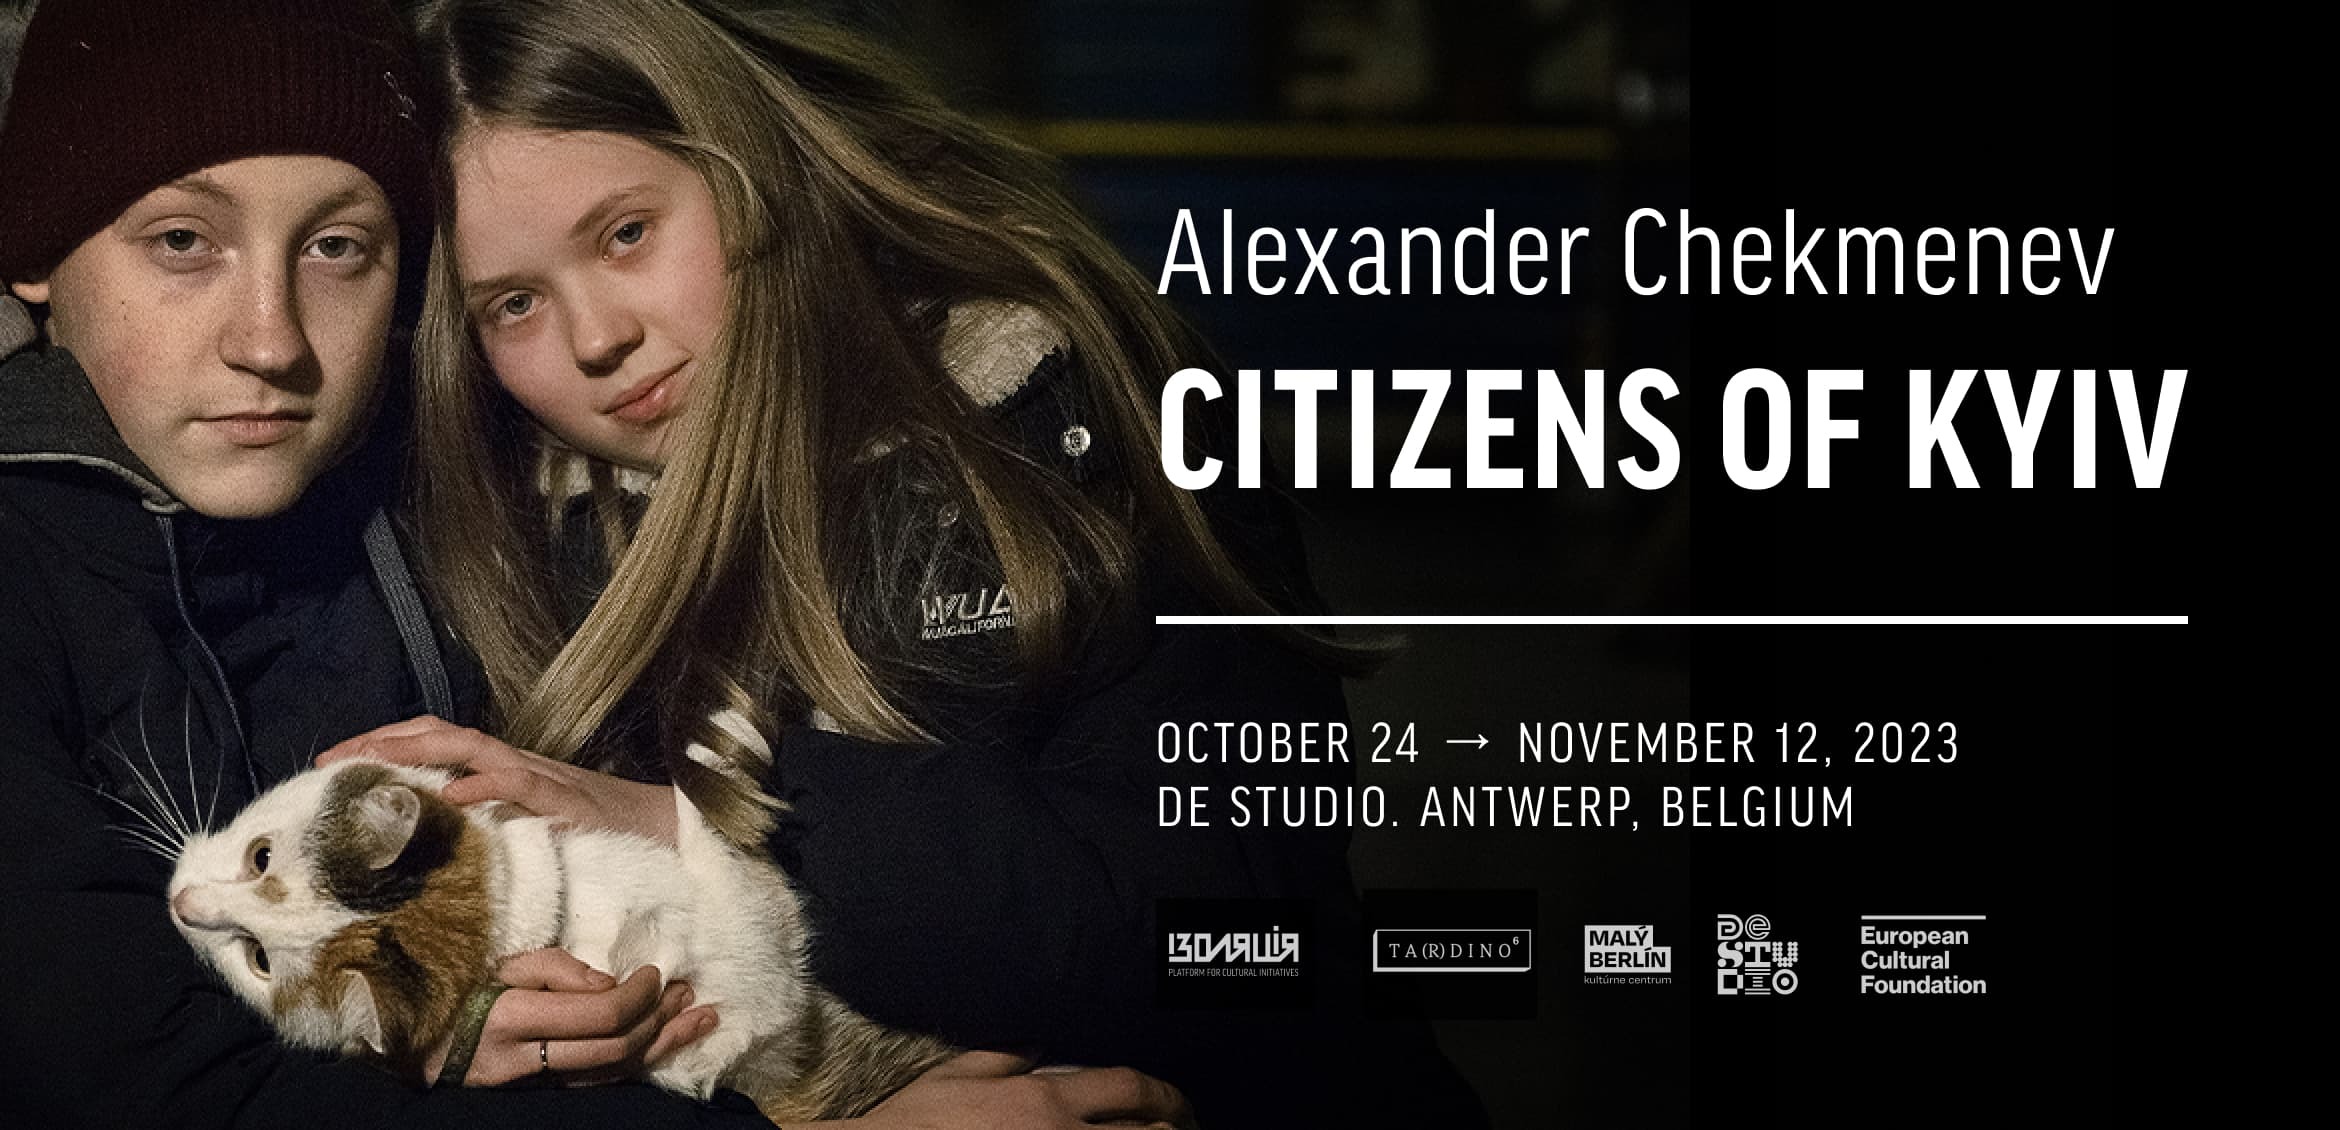 Alexander Chekmenev's photography exhibition Citizens of Kyiv in Antwerpen